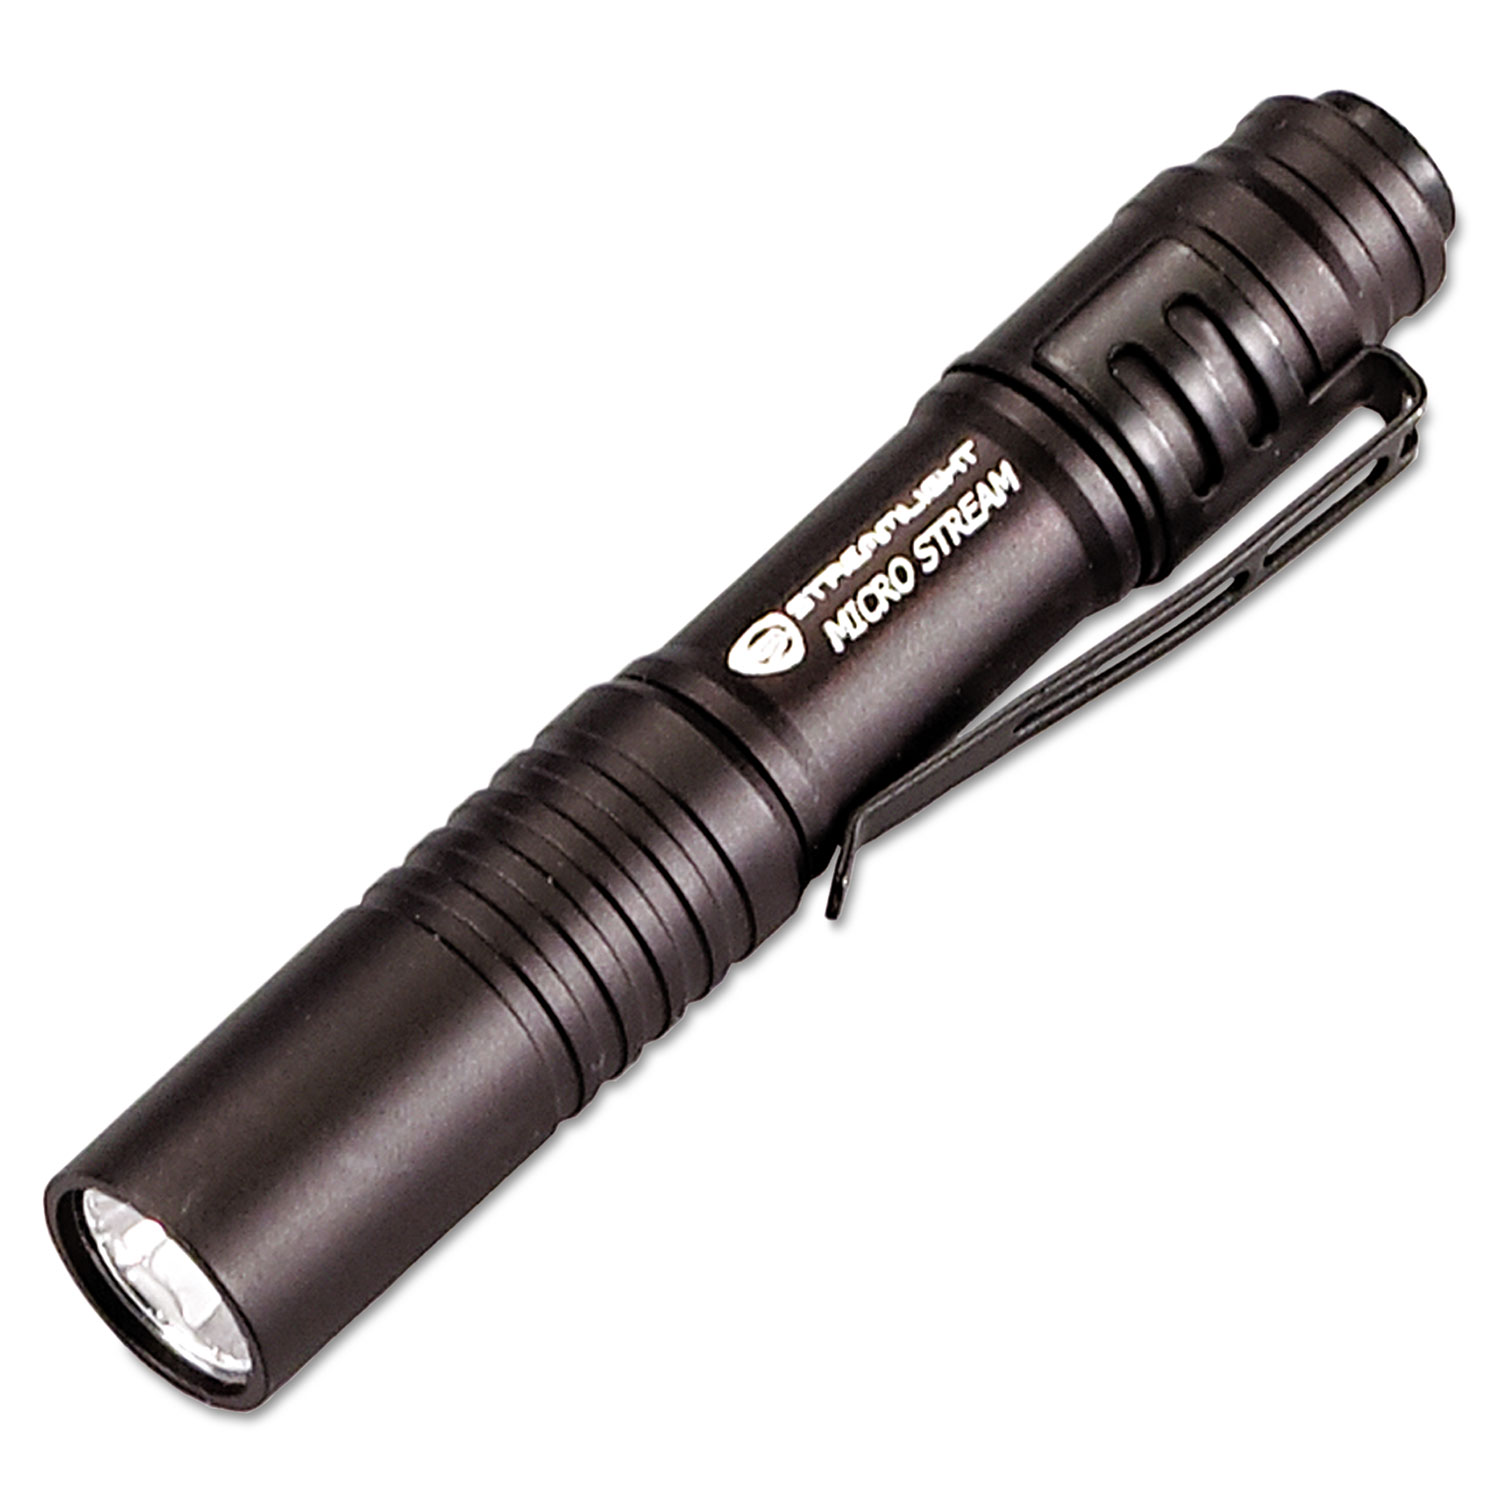  Streamlight 66318 MicroStream LED Pen Light, 1 AAA Battery (Included), Black (LGT66318) 